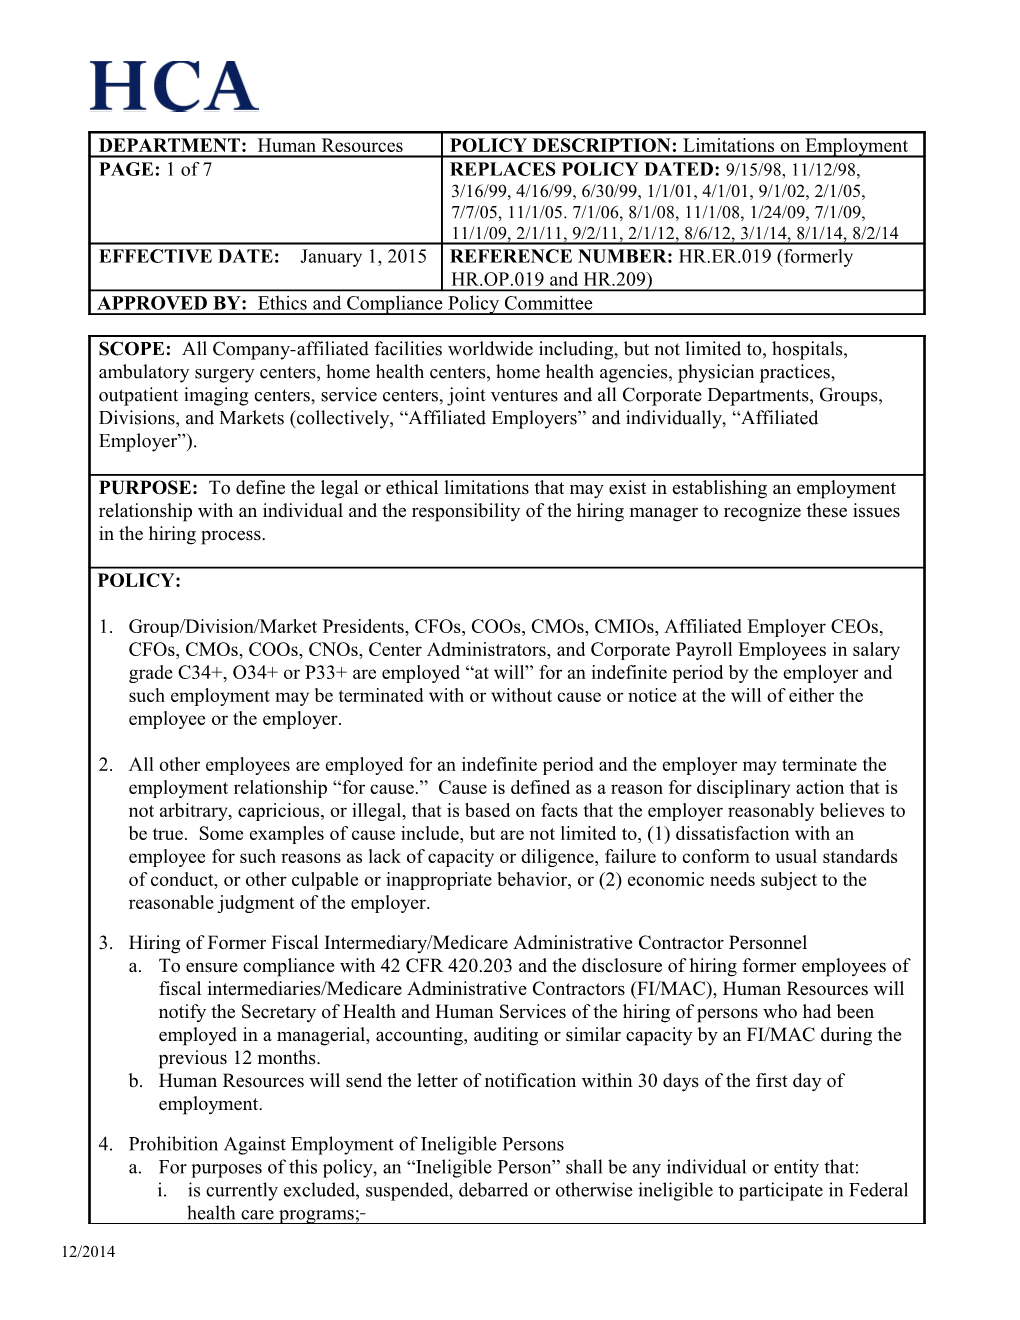 Limitations on Employment HR.OP.019